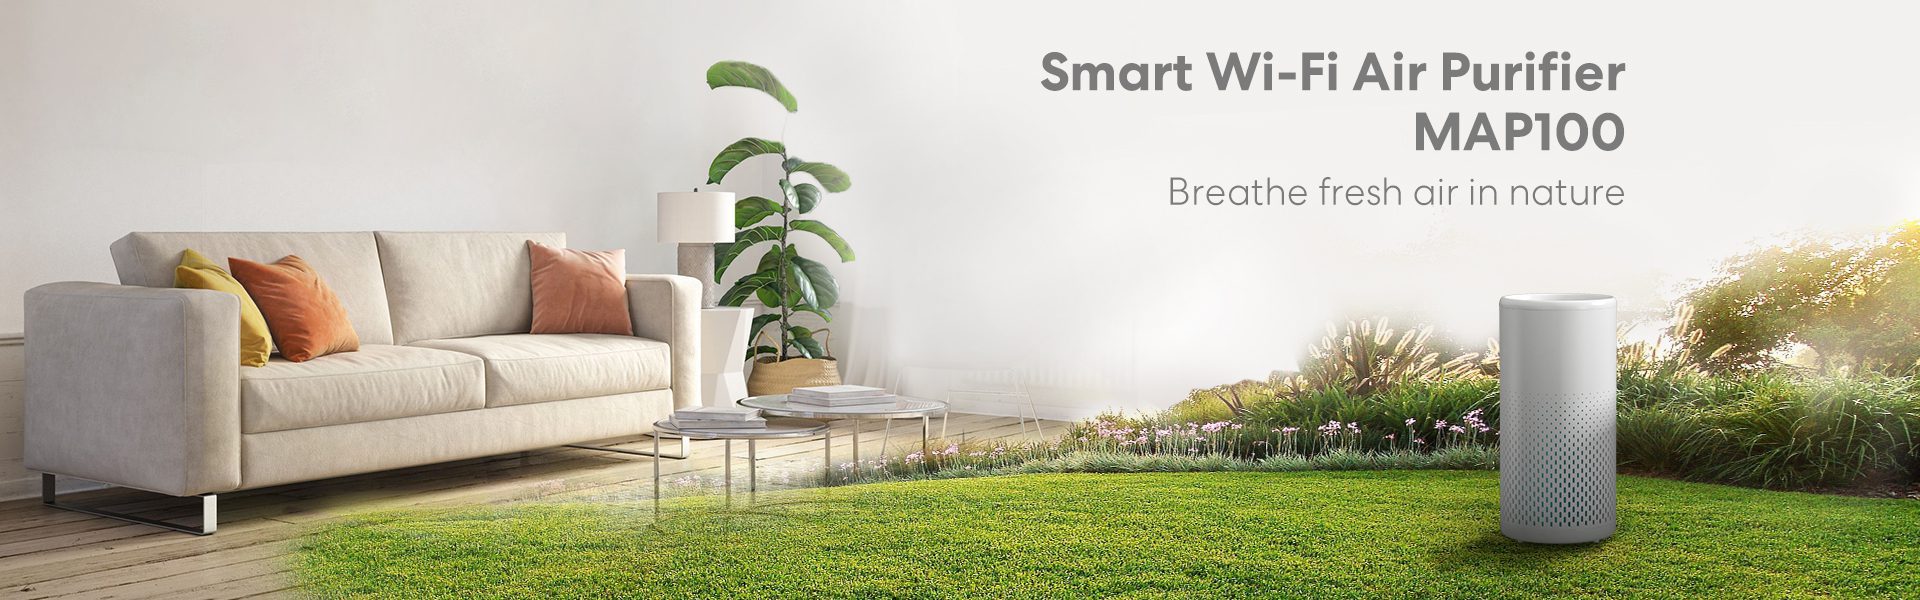 1628157431682 922d5da9 Meross Smart WiFi Air Purifier for Home Supports Apple HomeKit, Alexa, Google Home and SmartThings, for Allergies, Pets, Smoke, Dust, Pollen